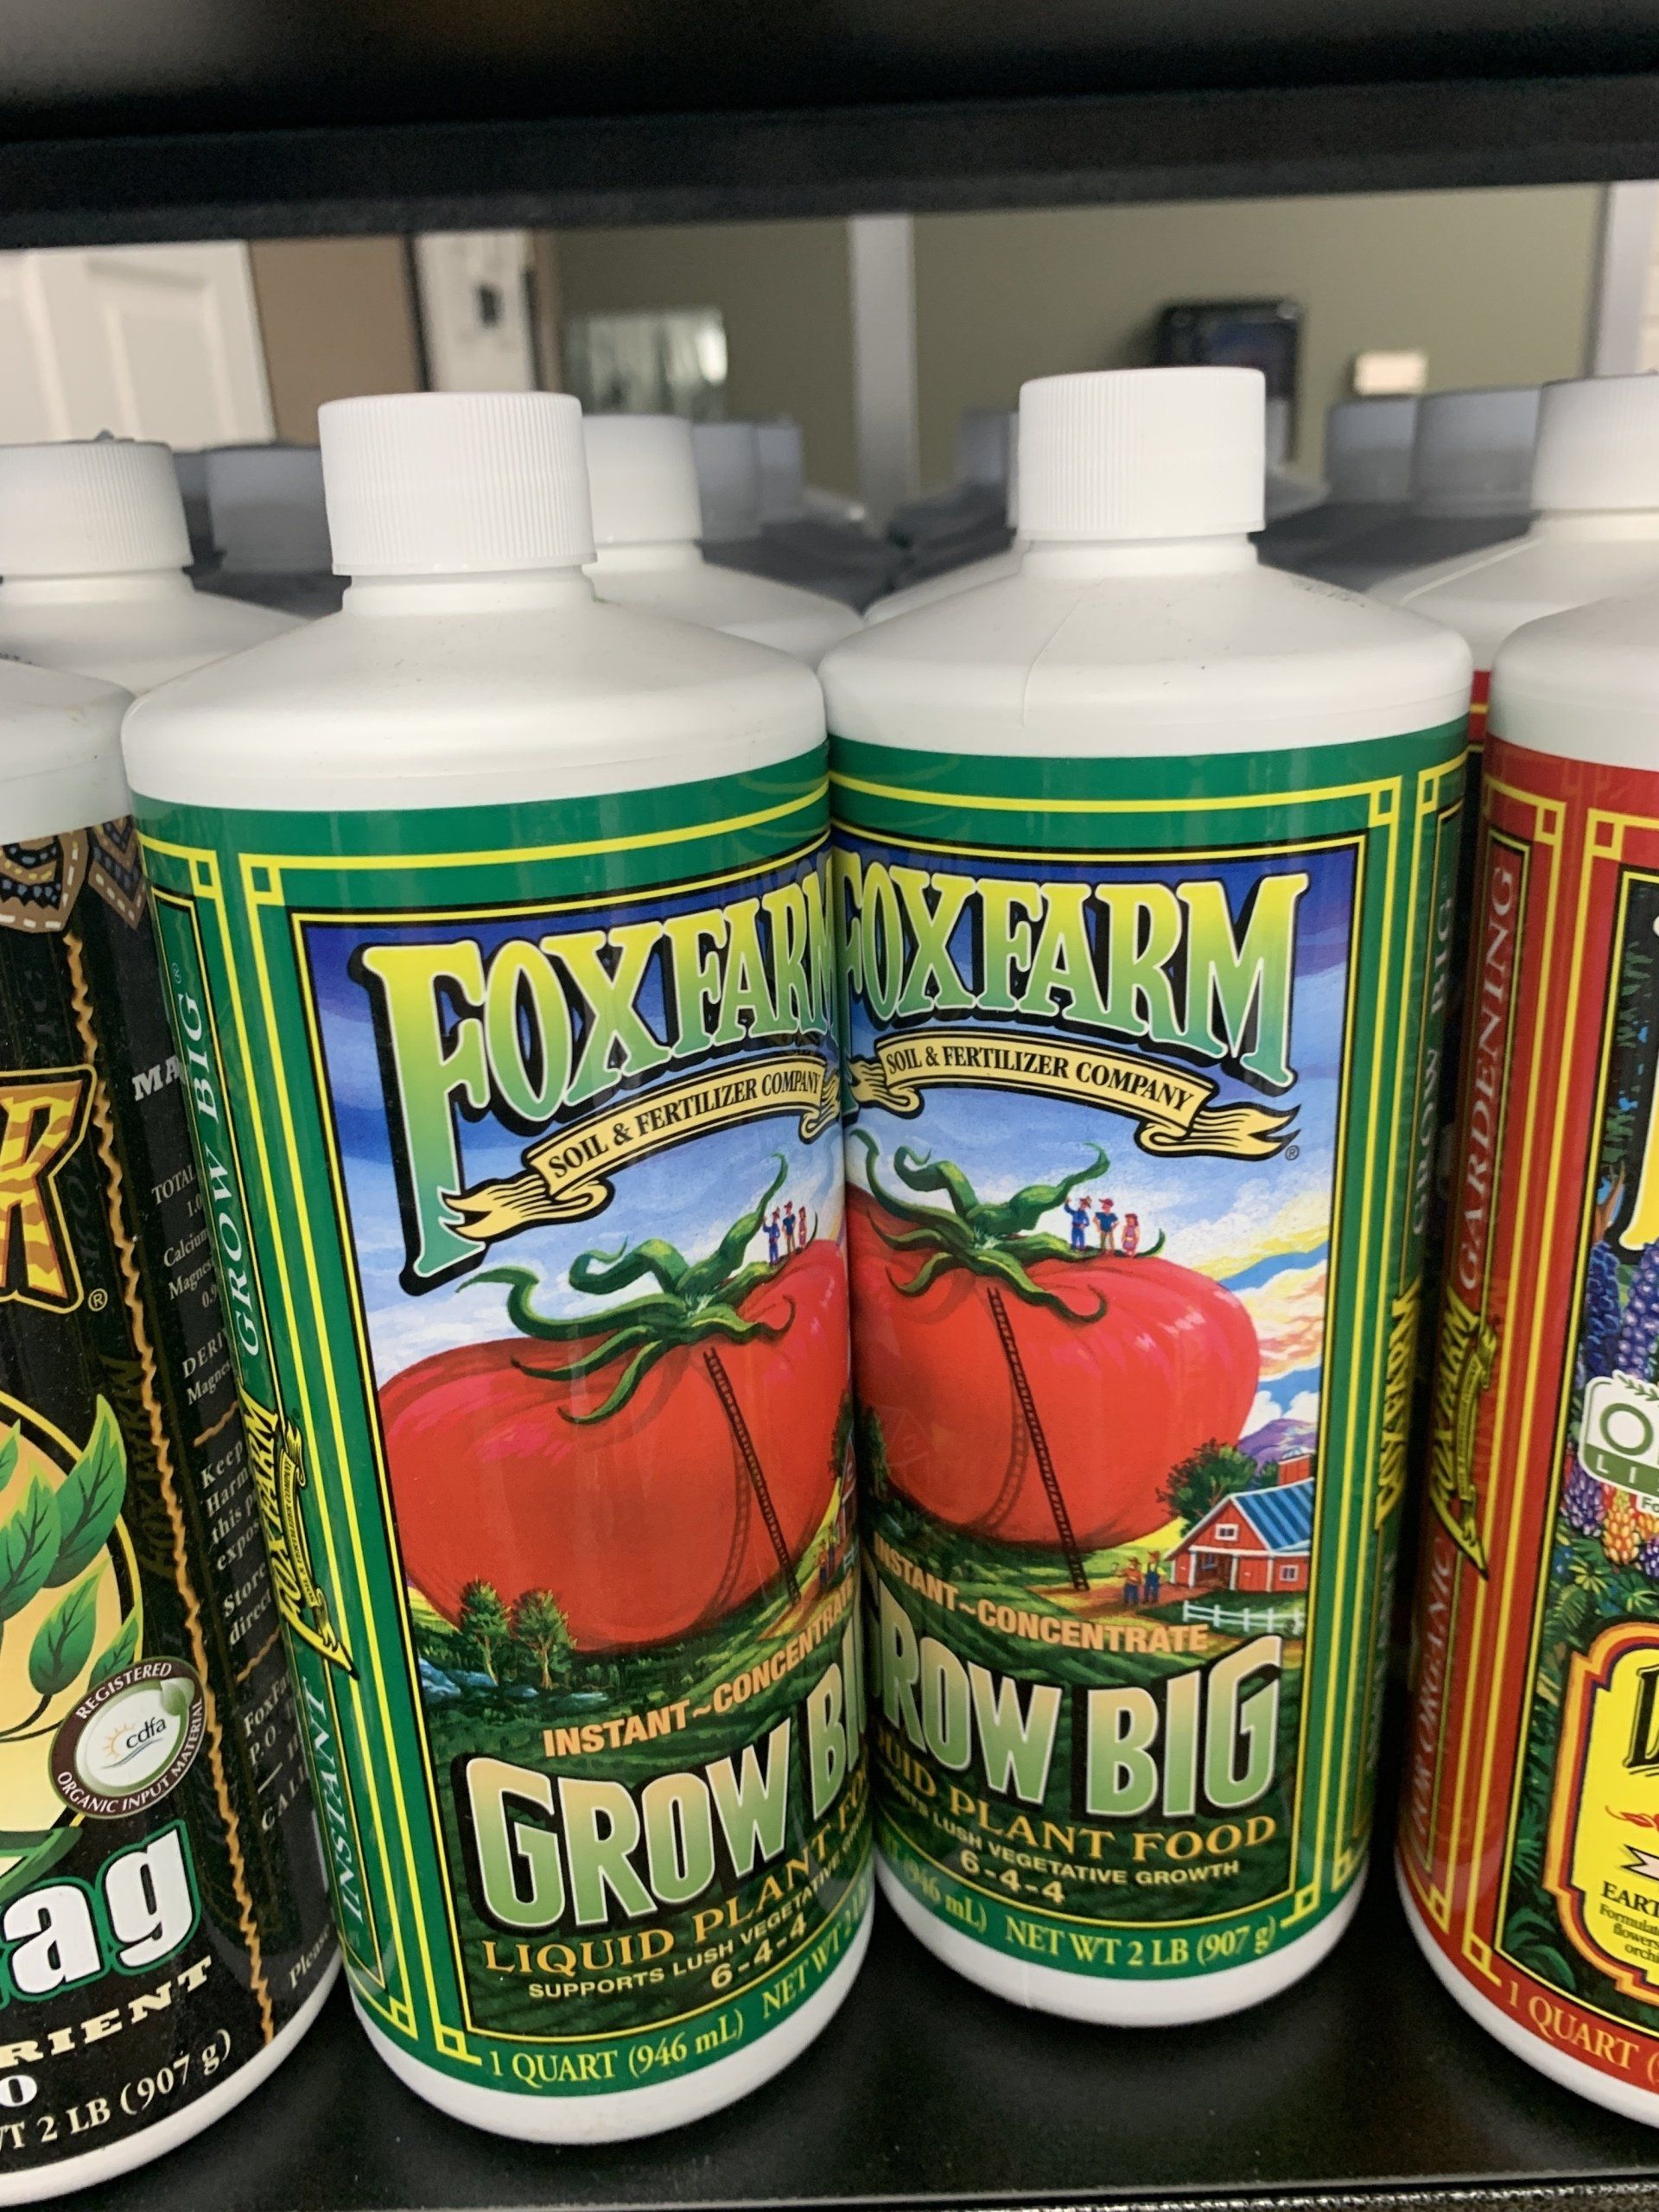 Fox Farm Grow Big Liquid Plant Food